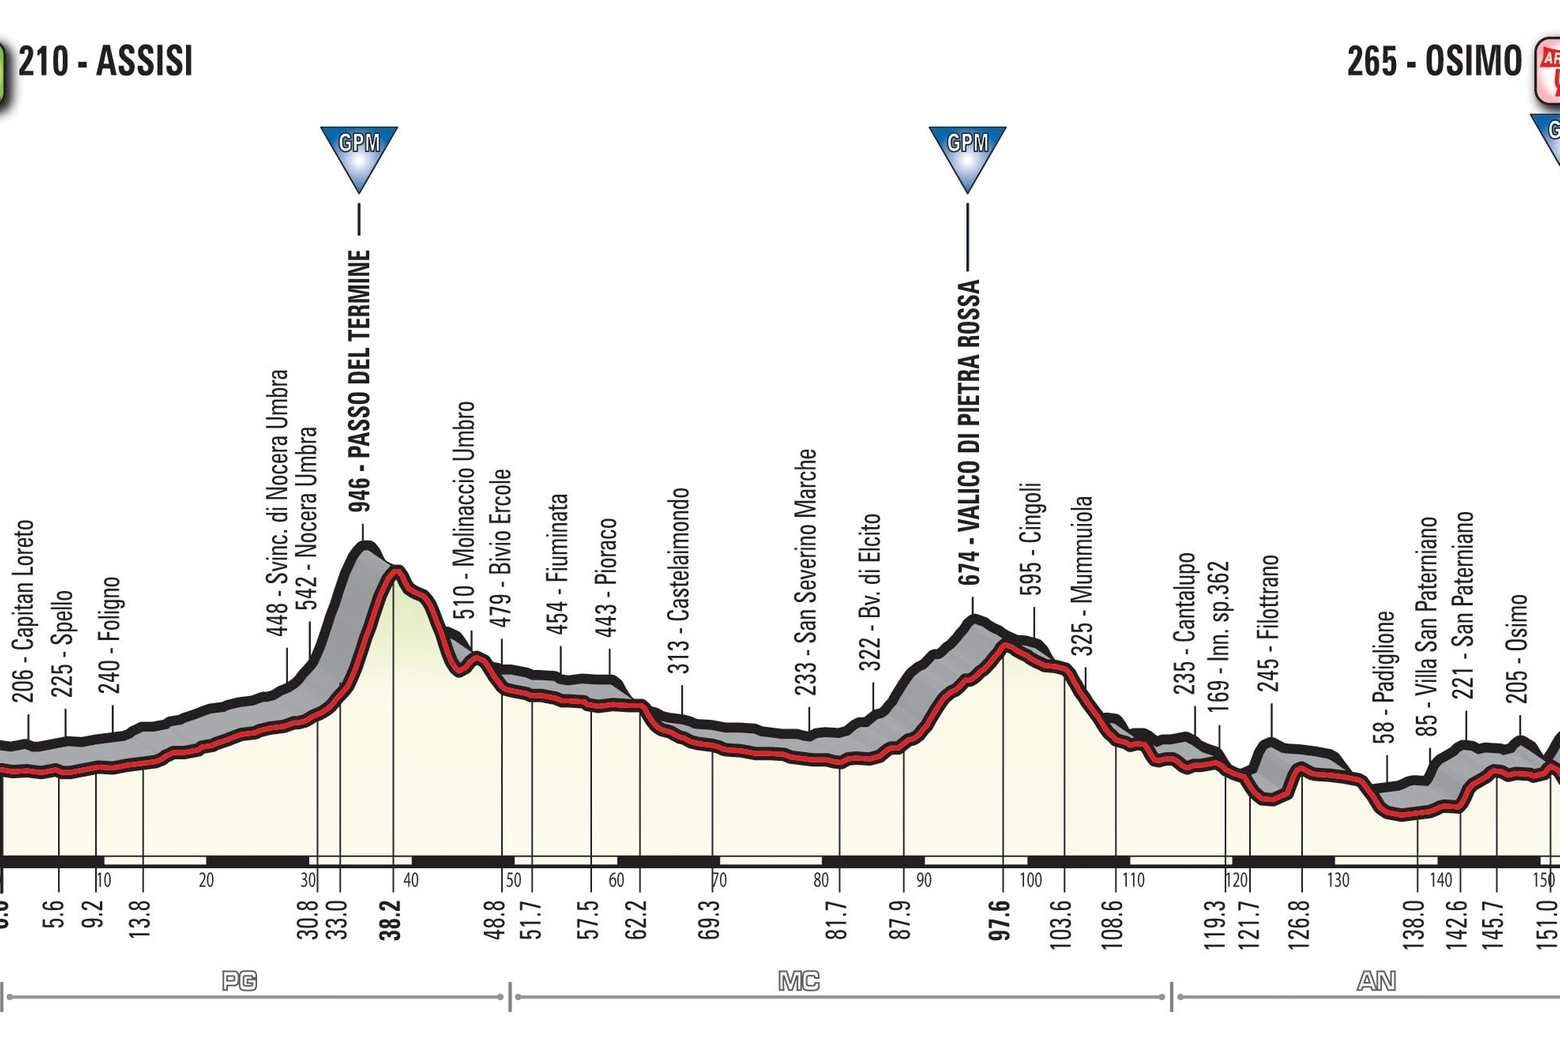 Giro d'Italia 2018, l'undicesima tappa: Assisi-Osimo